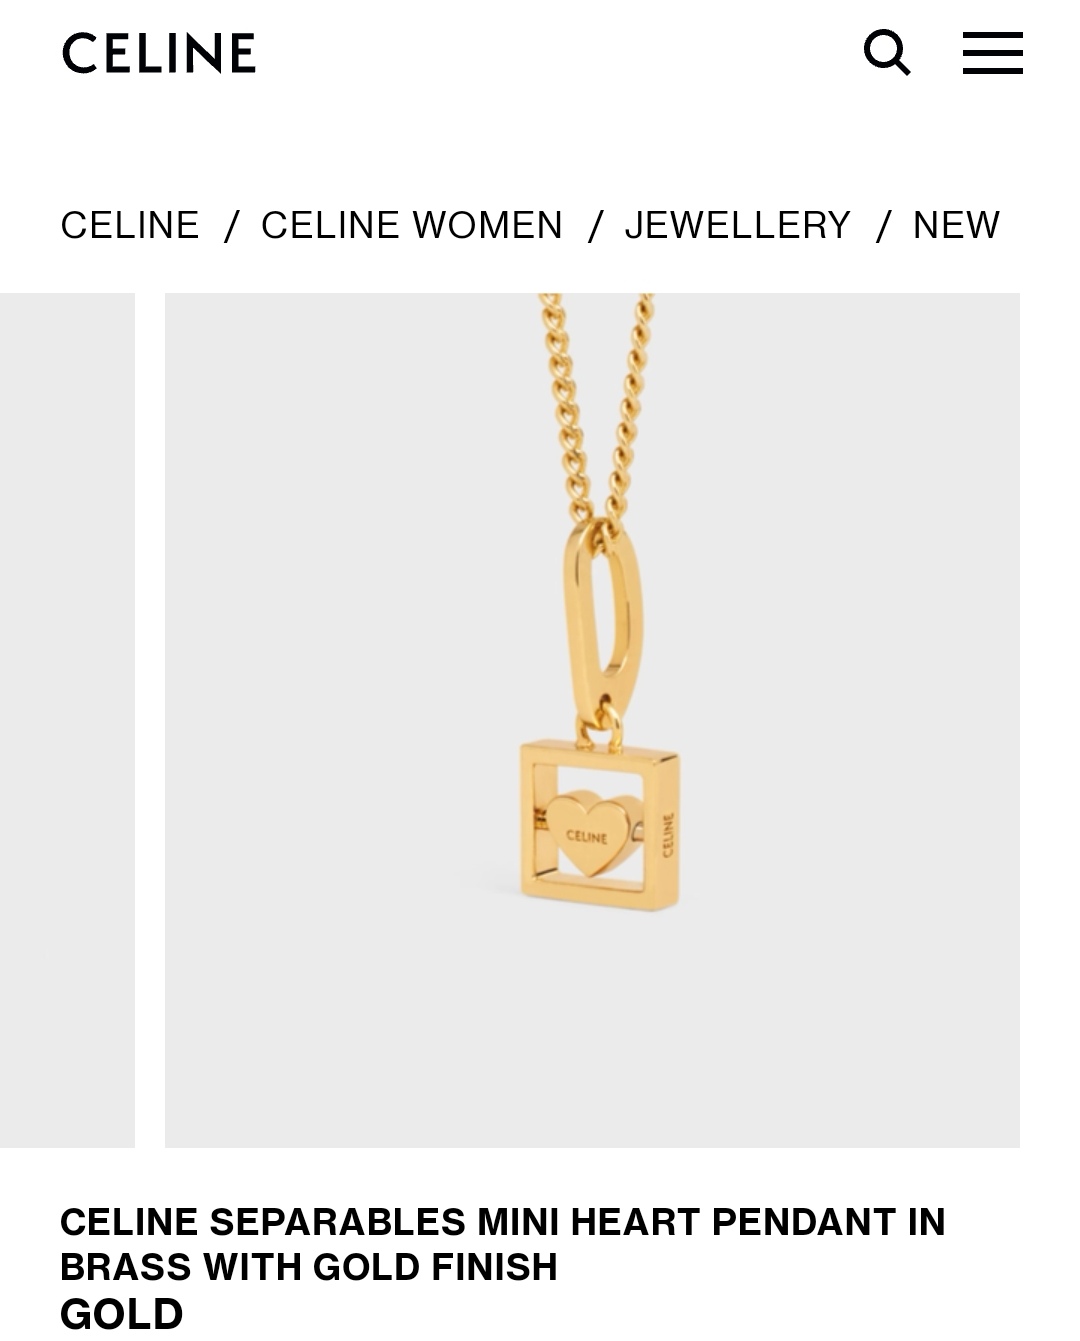 Celine necklace